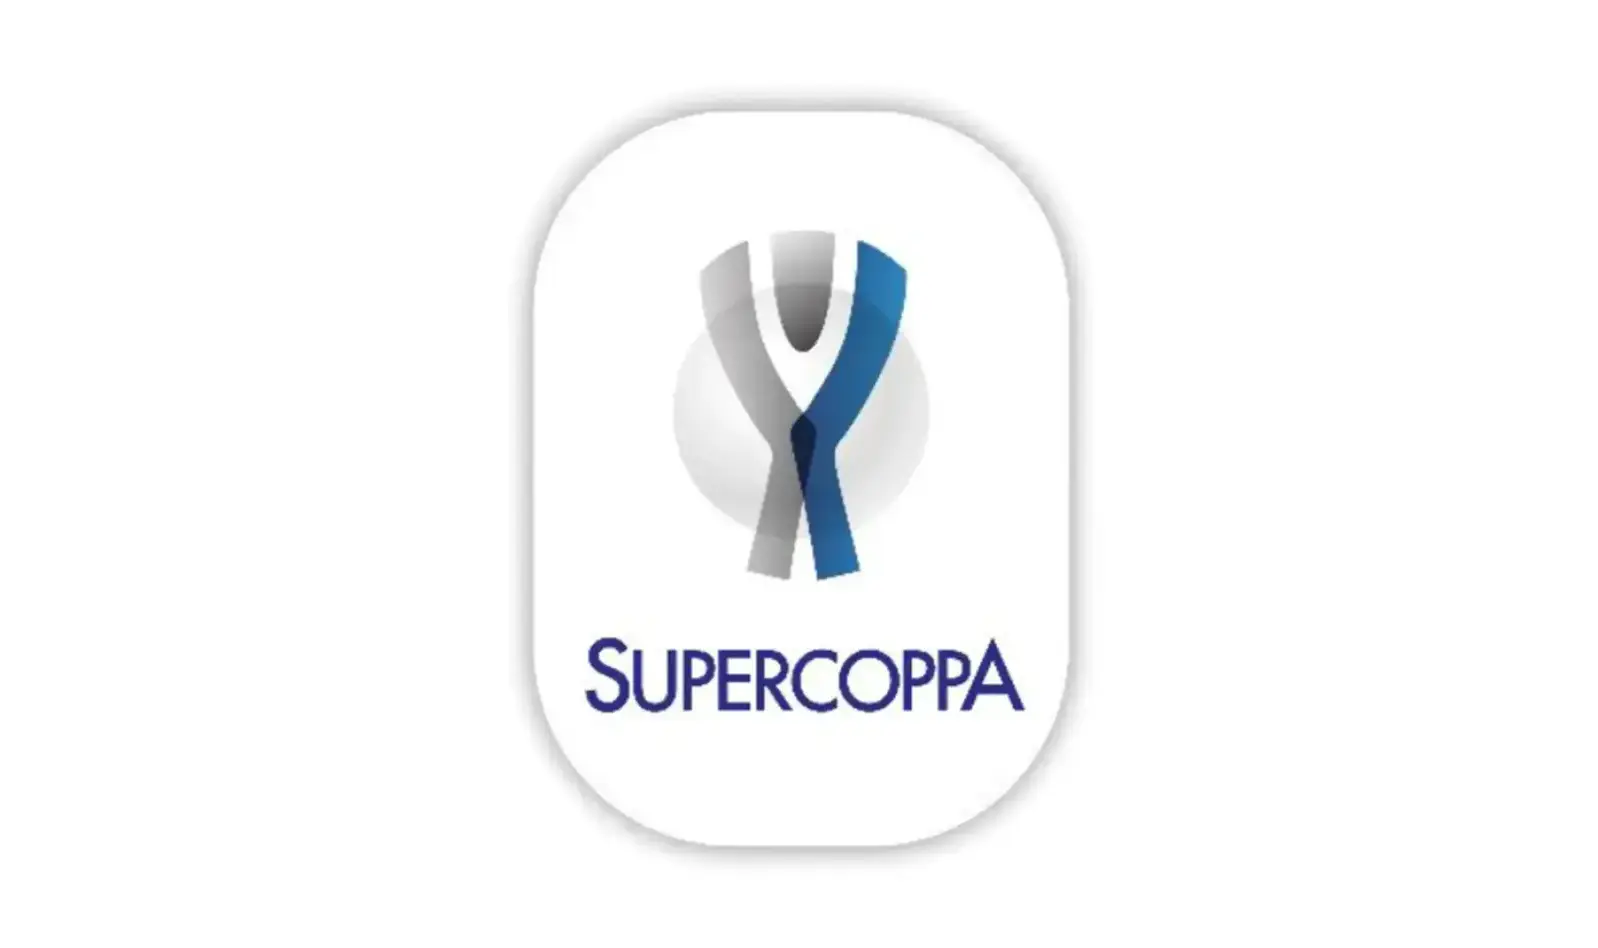 Italian super cup logo